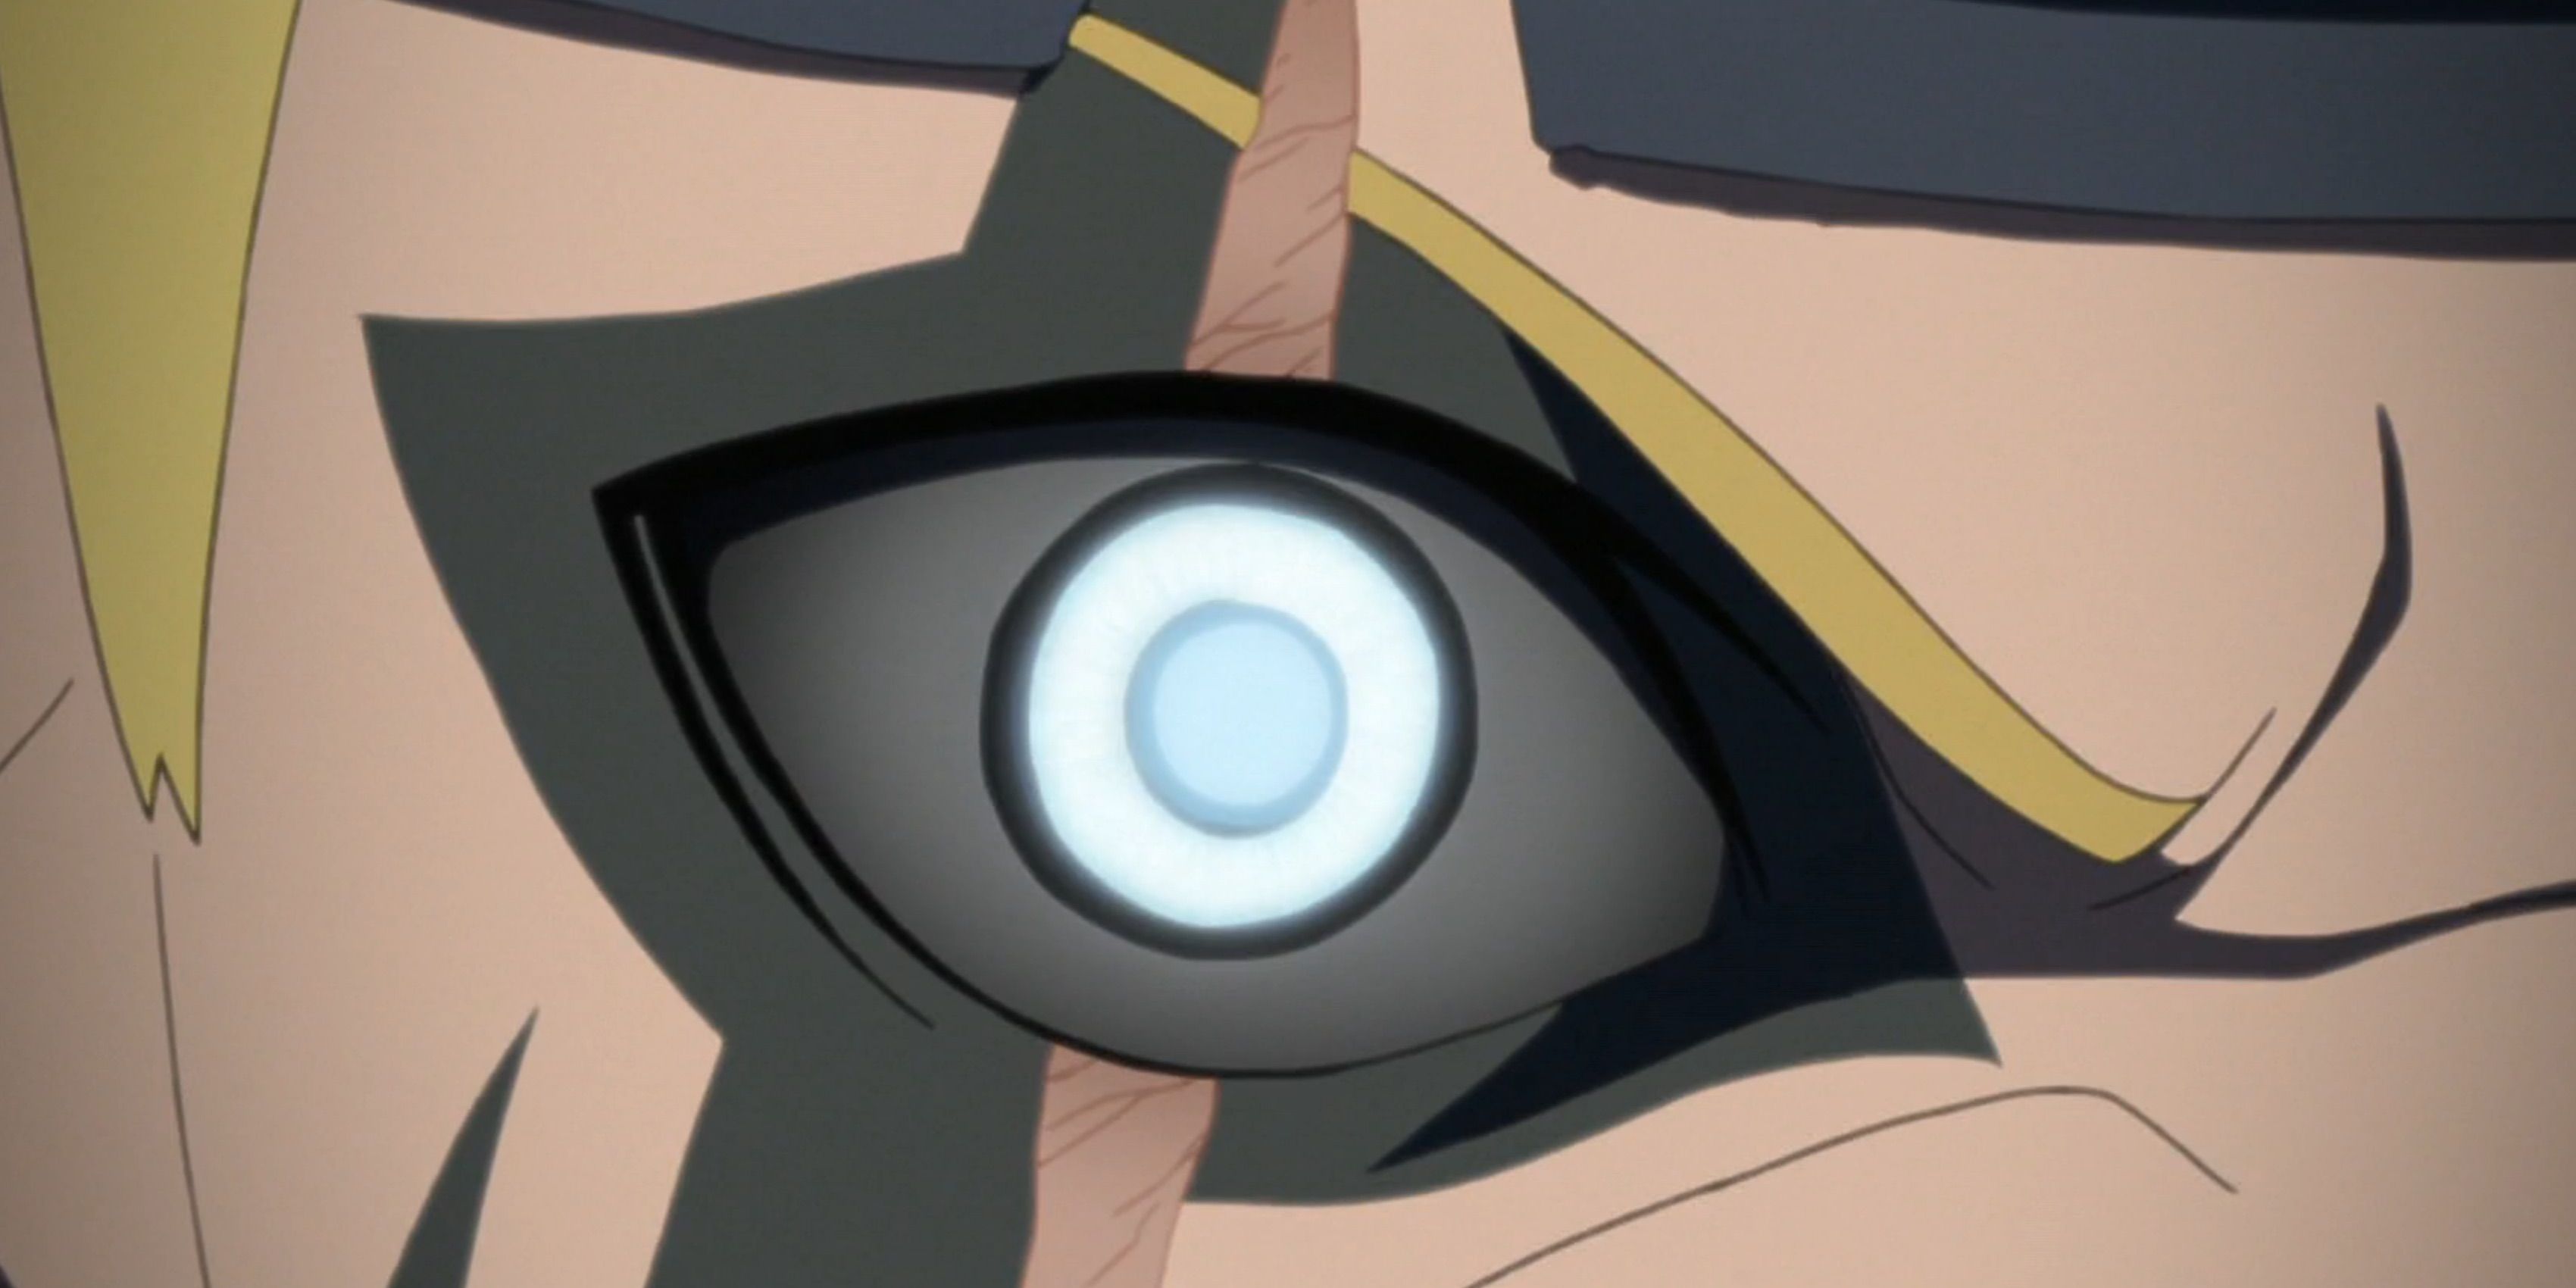 Boruto's Jogan eye